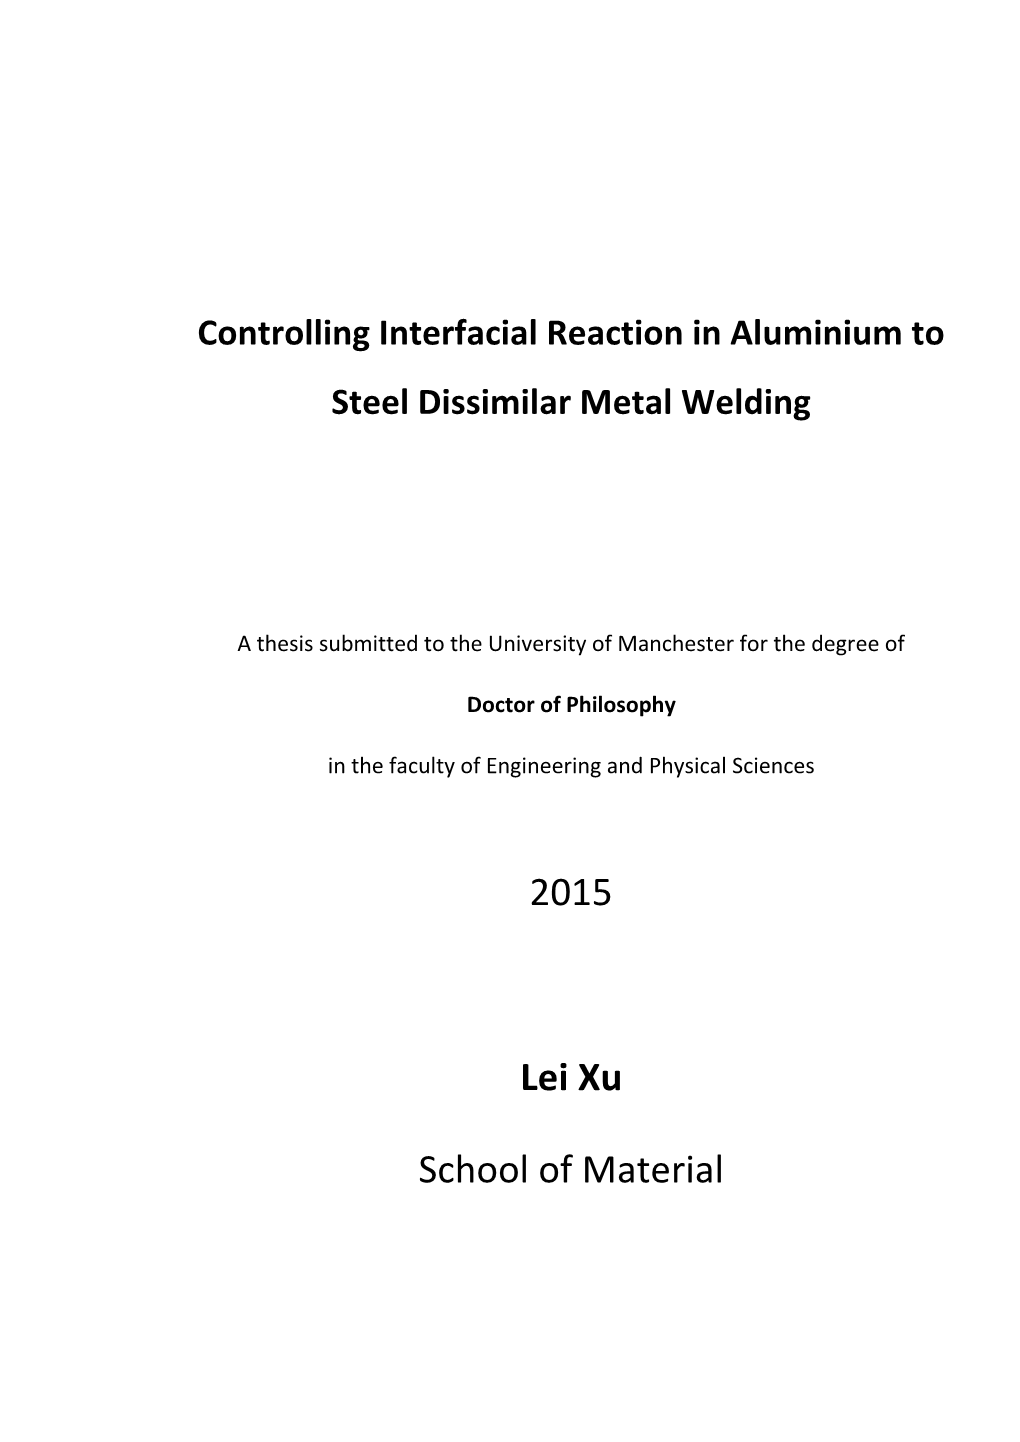 Controlling Interfacial Reaction in Aluminium to Steel Dissimilar Metal Welding